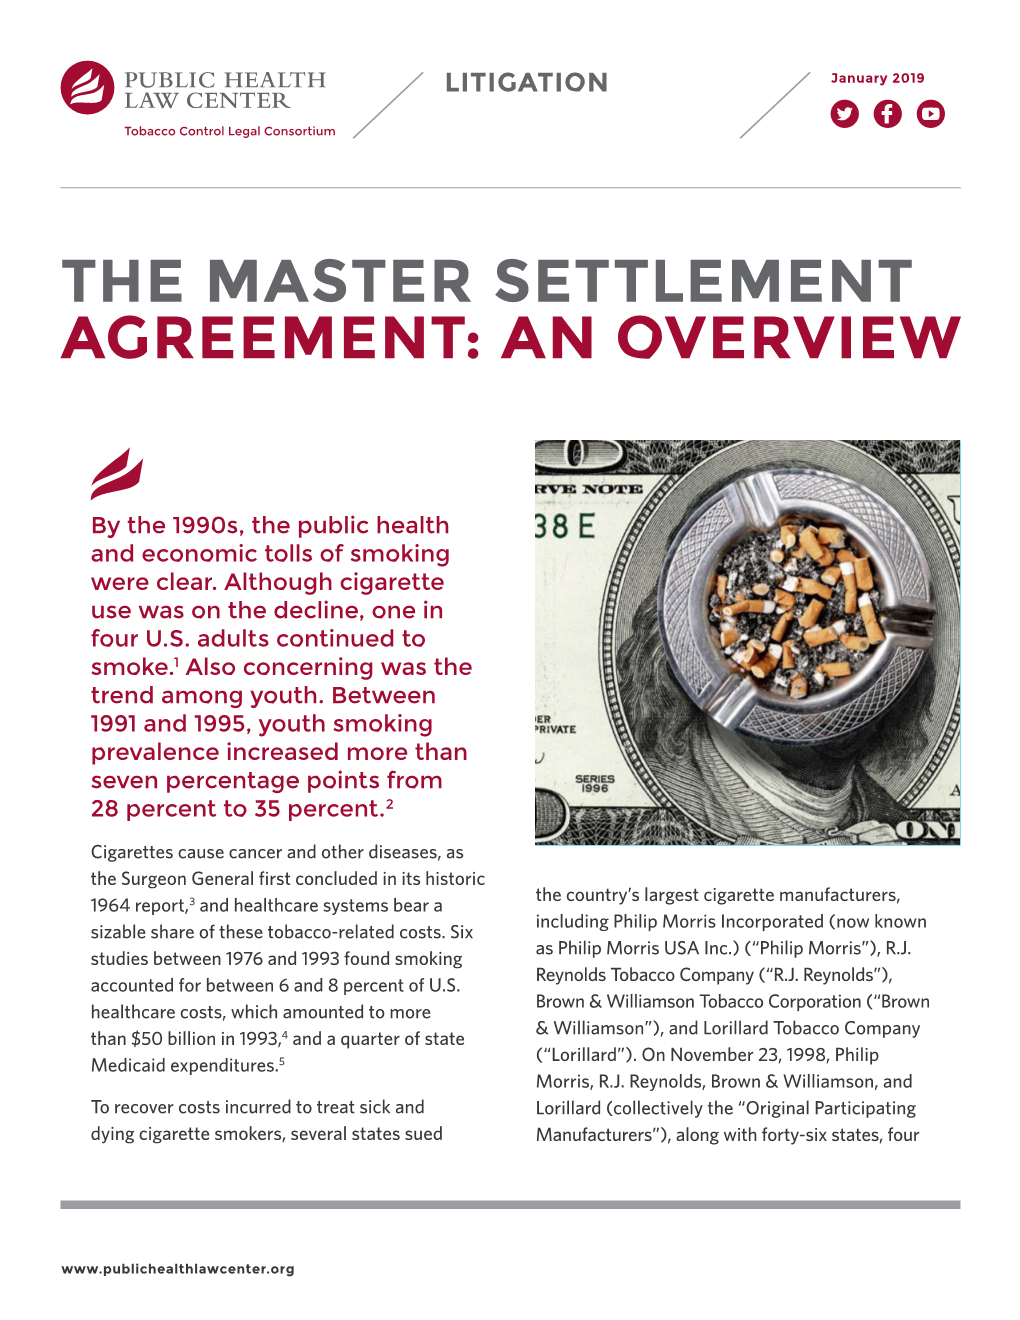 The Master Settlement Agreement: an Overview